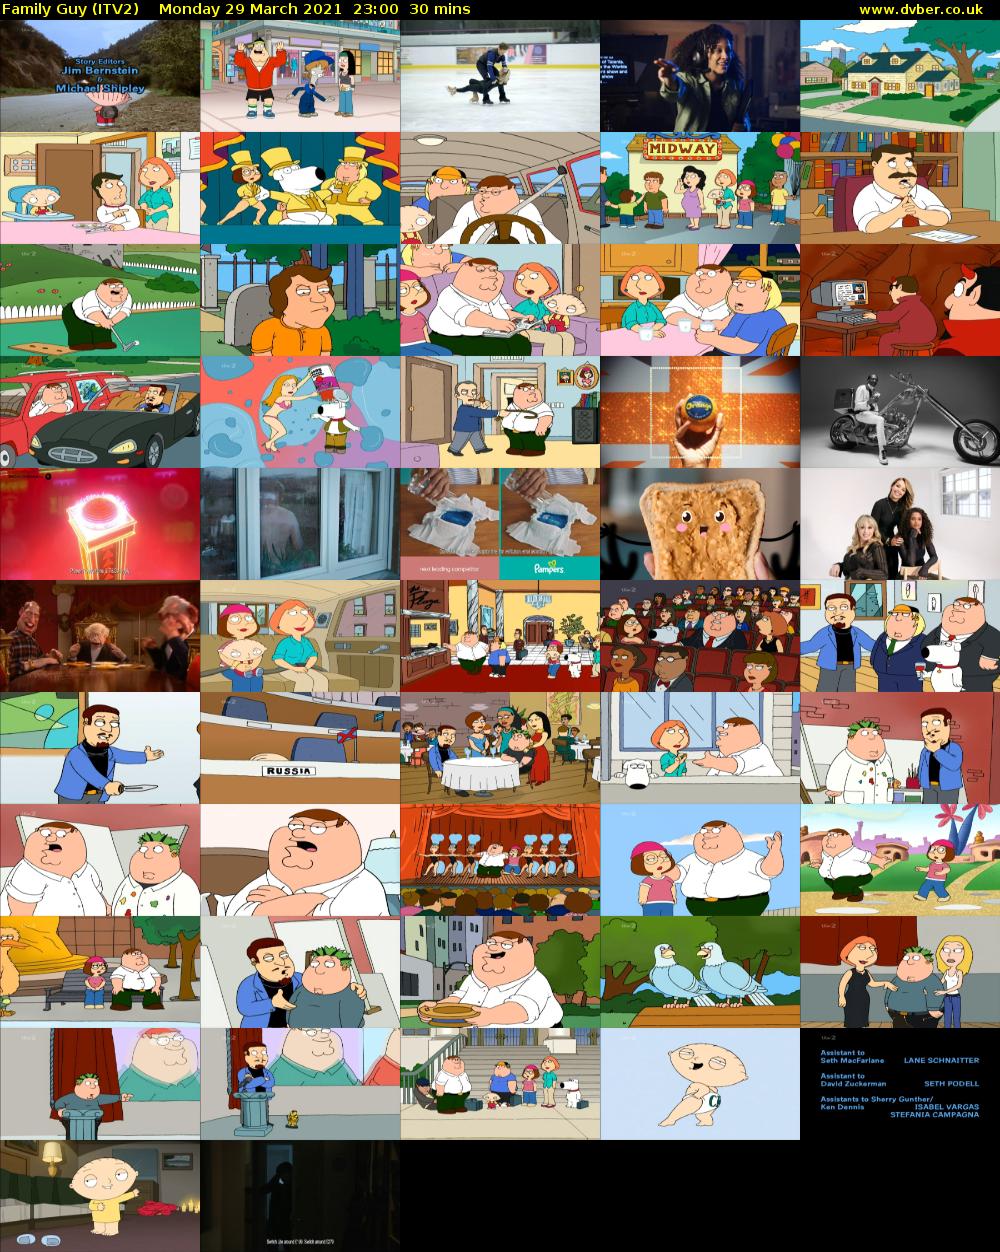 Family Guy (ITV2) Monday 29 March 2021 23:00 - 23:30